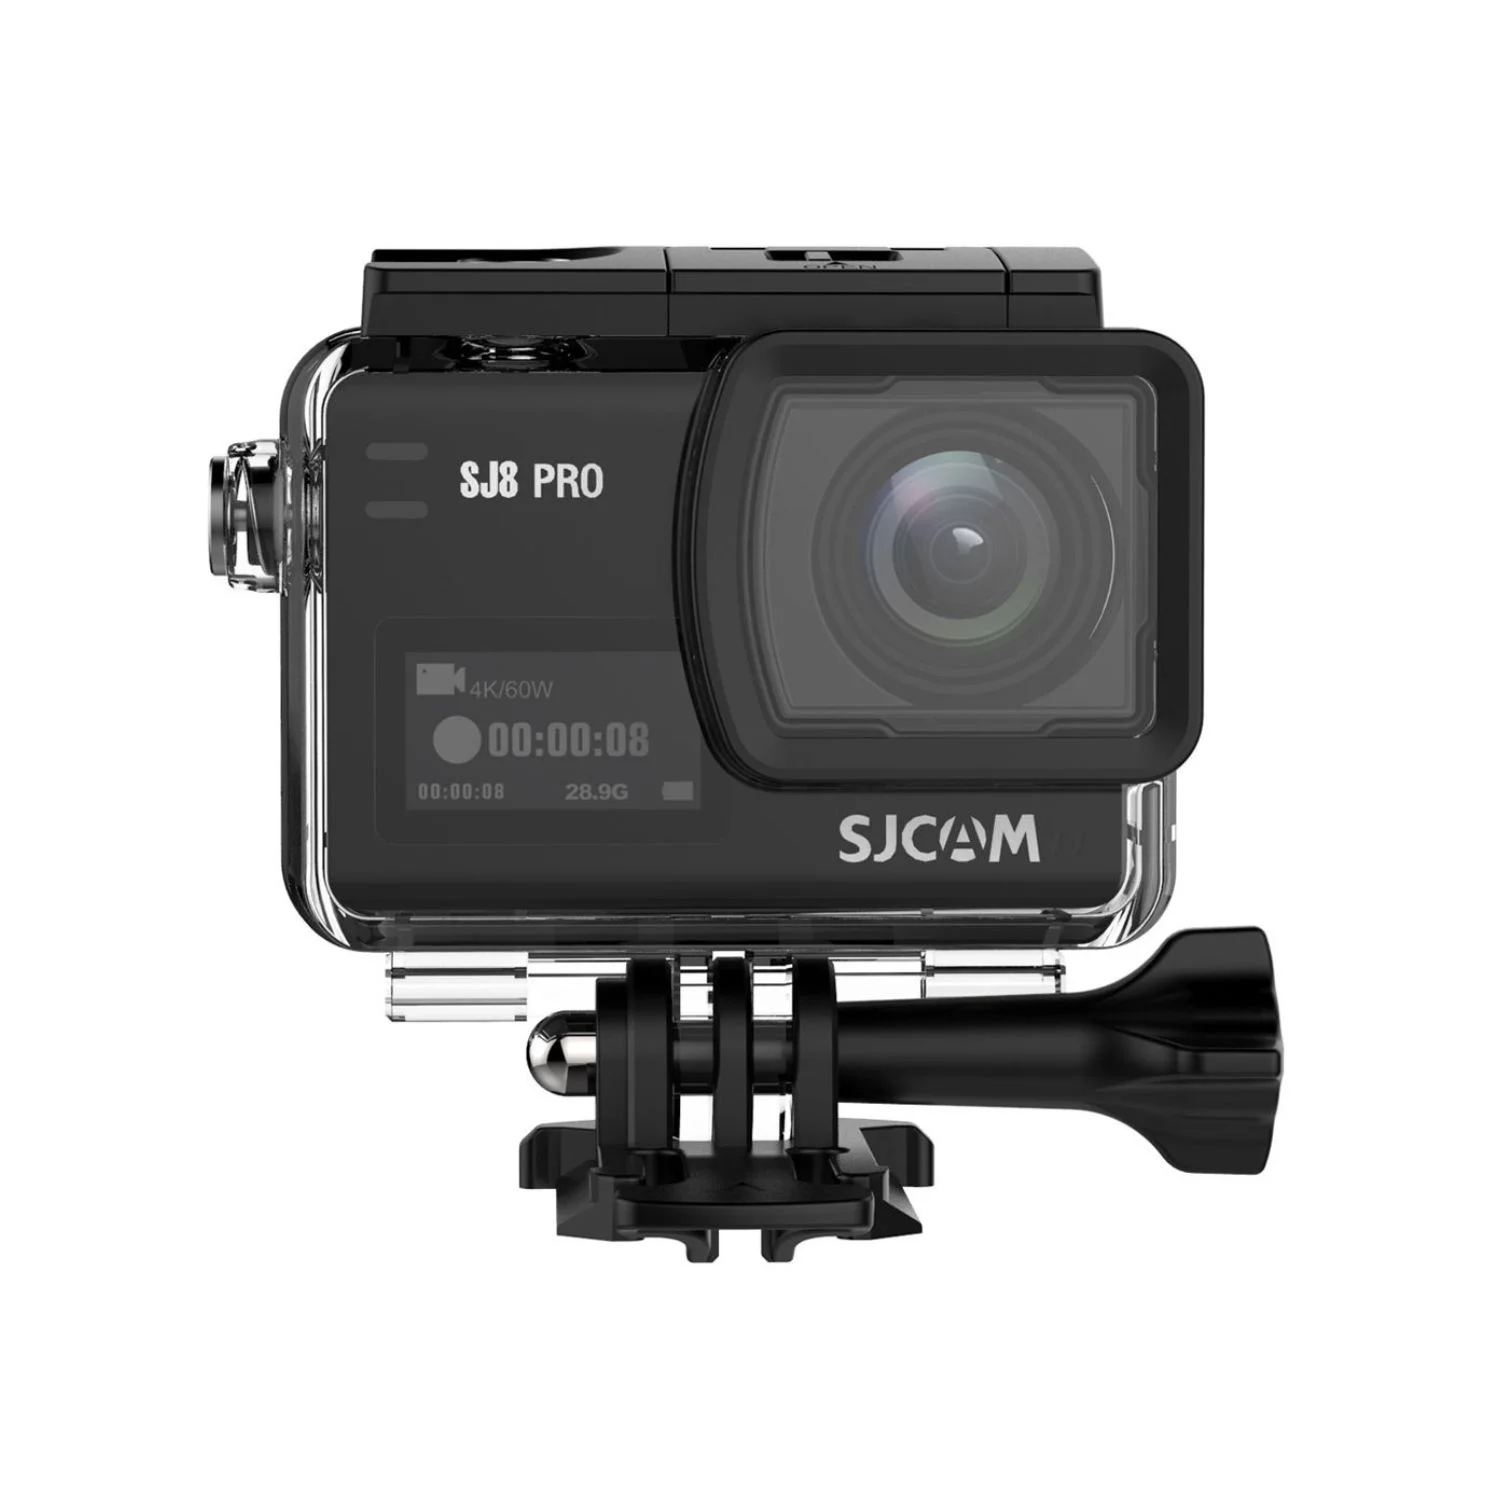  SJCAM Sj8pro Real 4k60fps Action Camera with 2.33